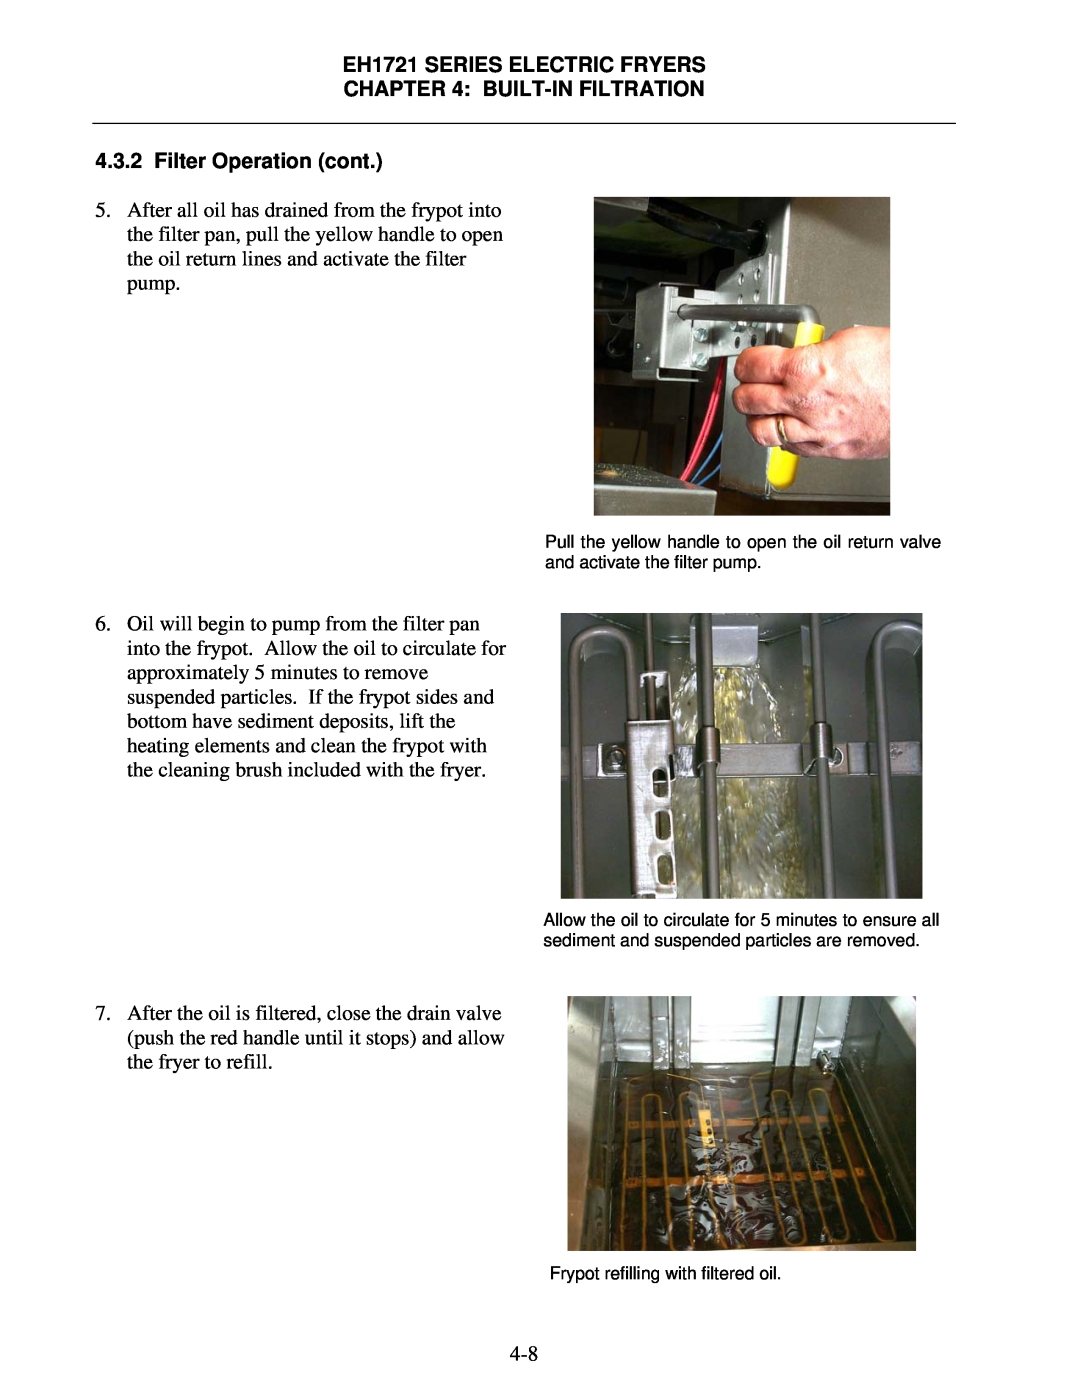 Frymaster FPH1721, BIH1721 operation manual 